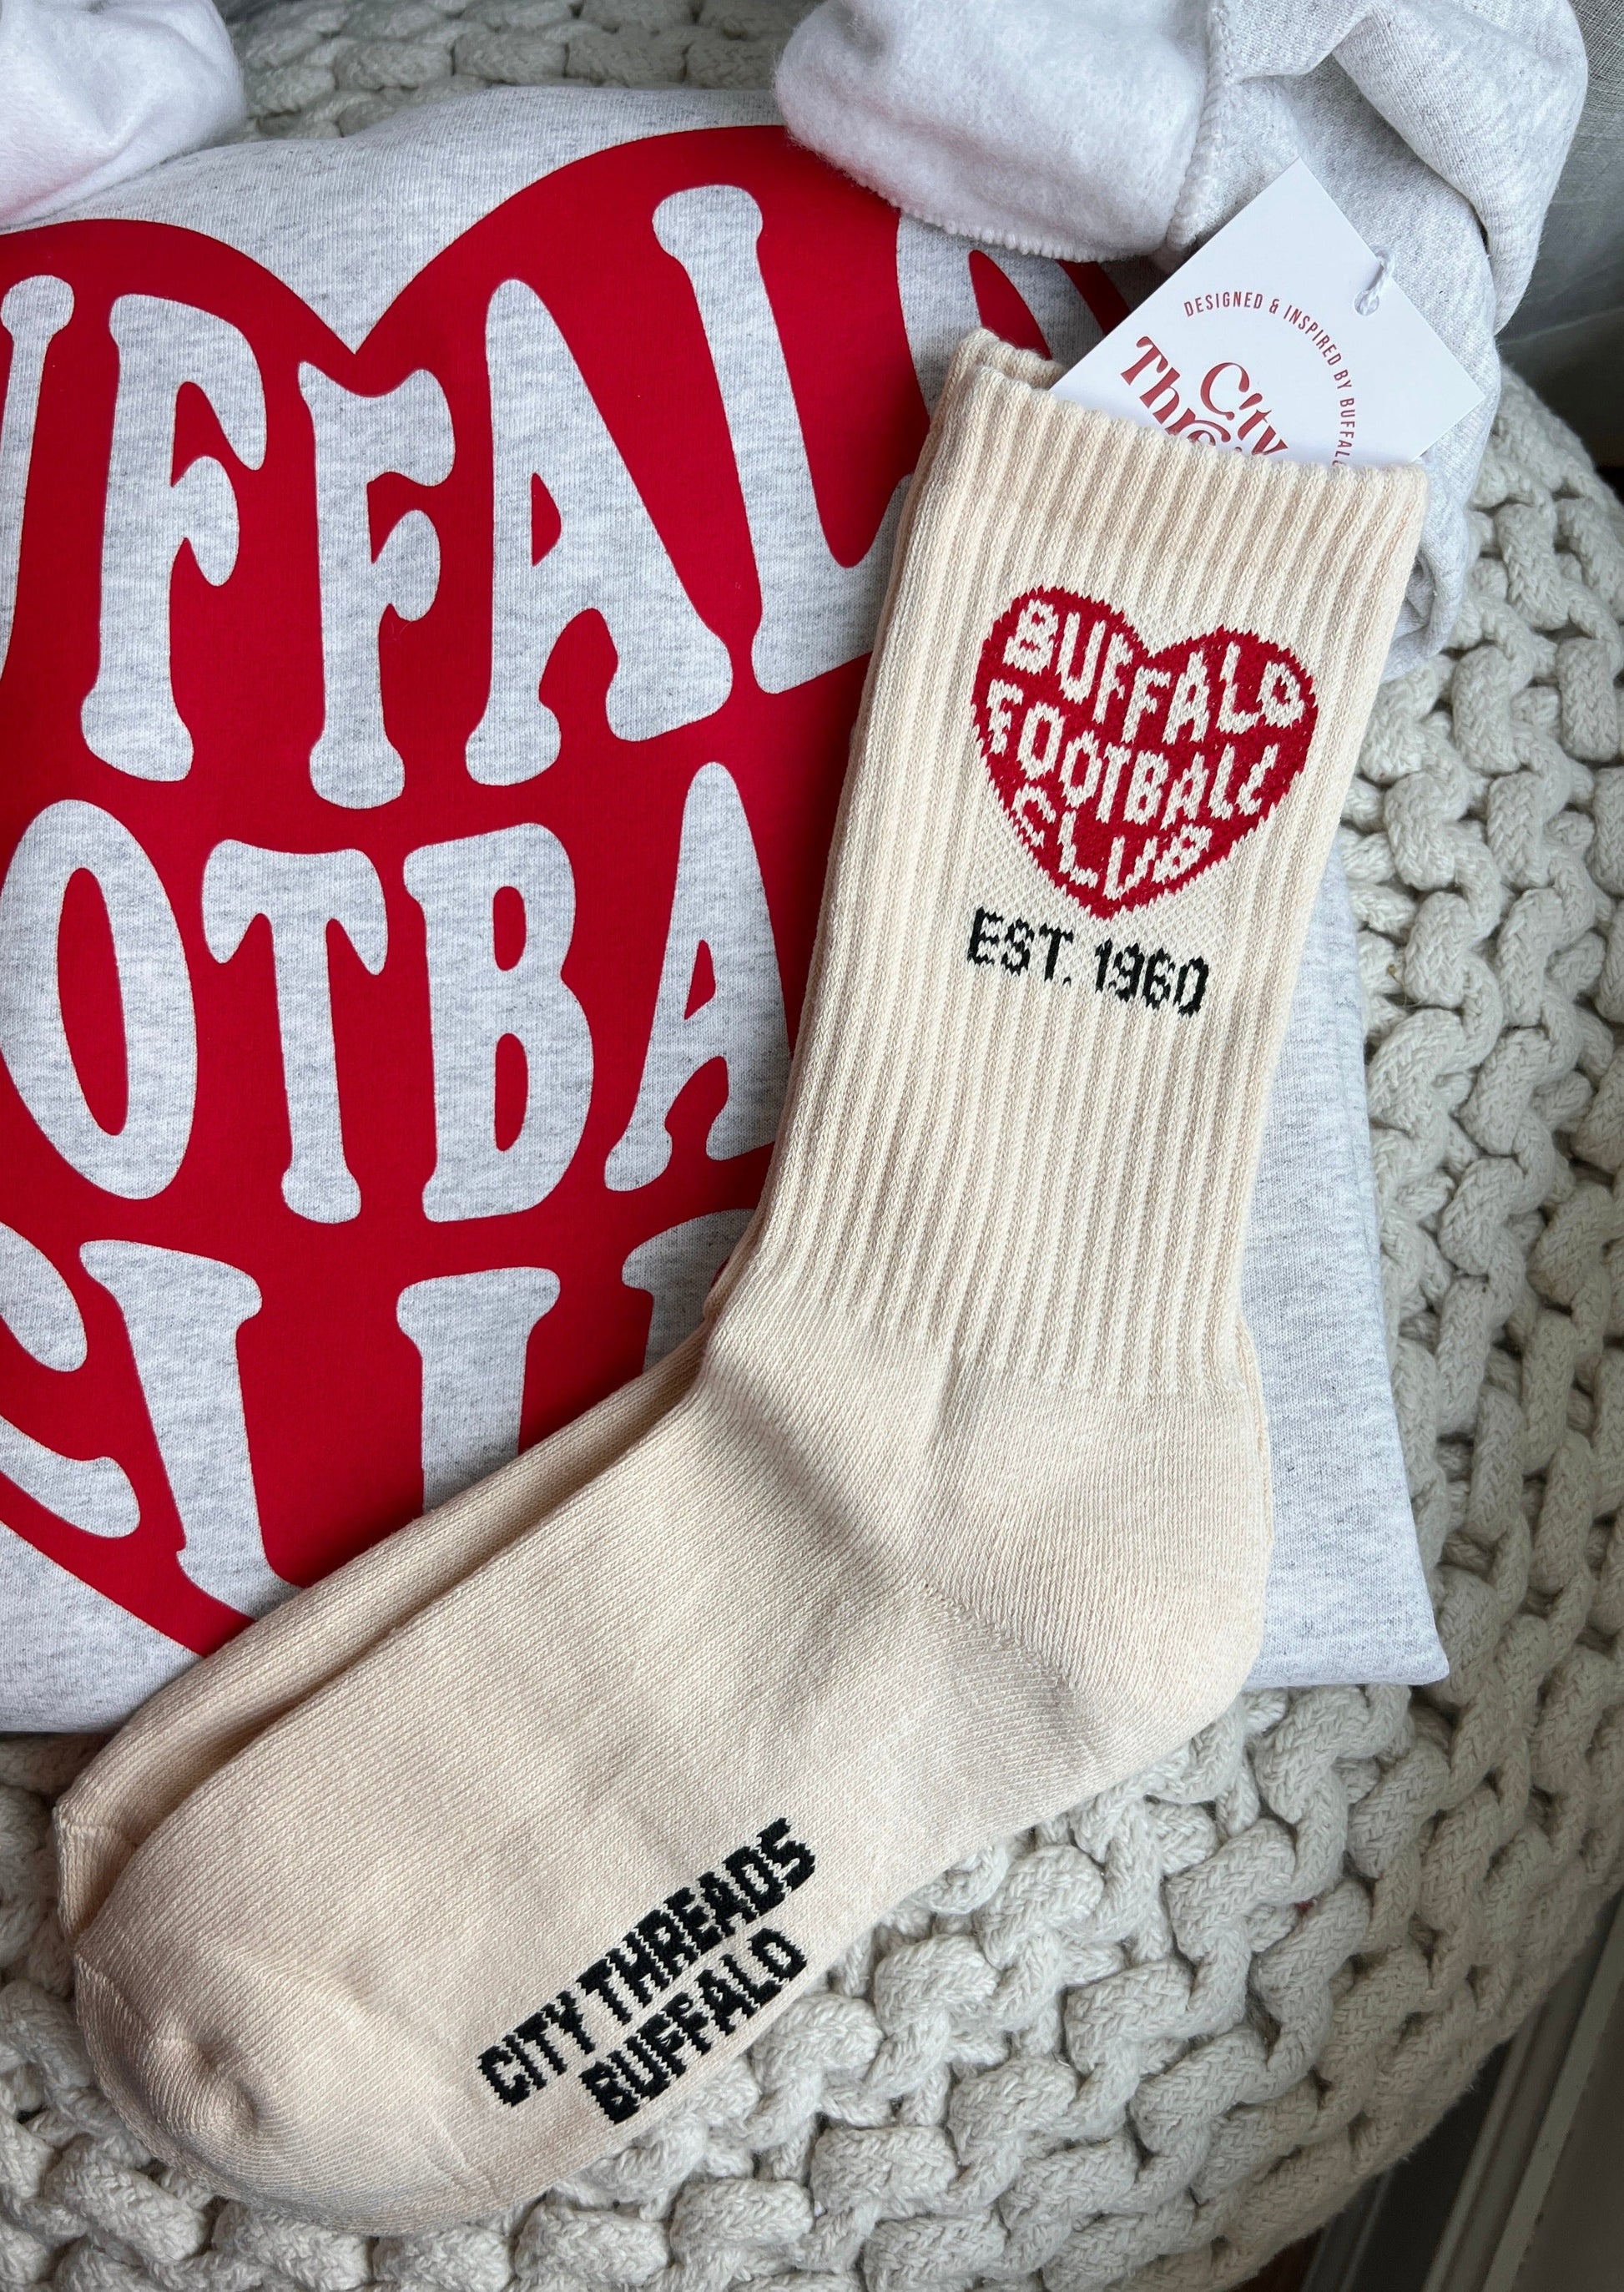 Buffalo Football Club Socks – City Threads